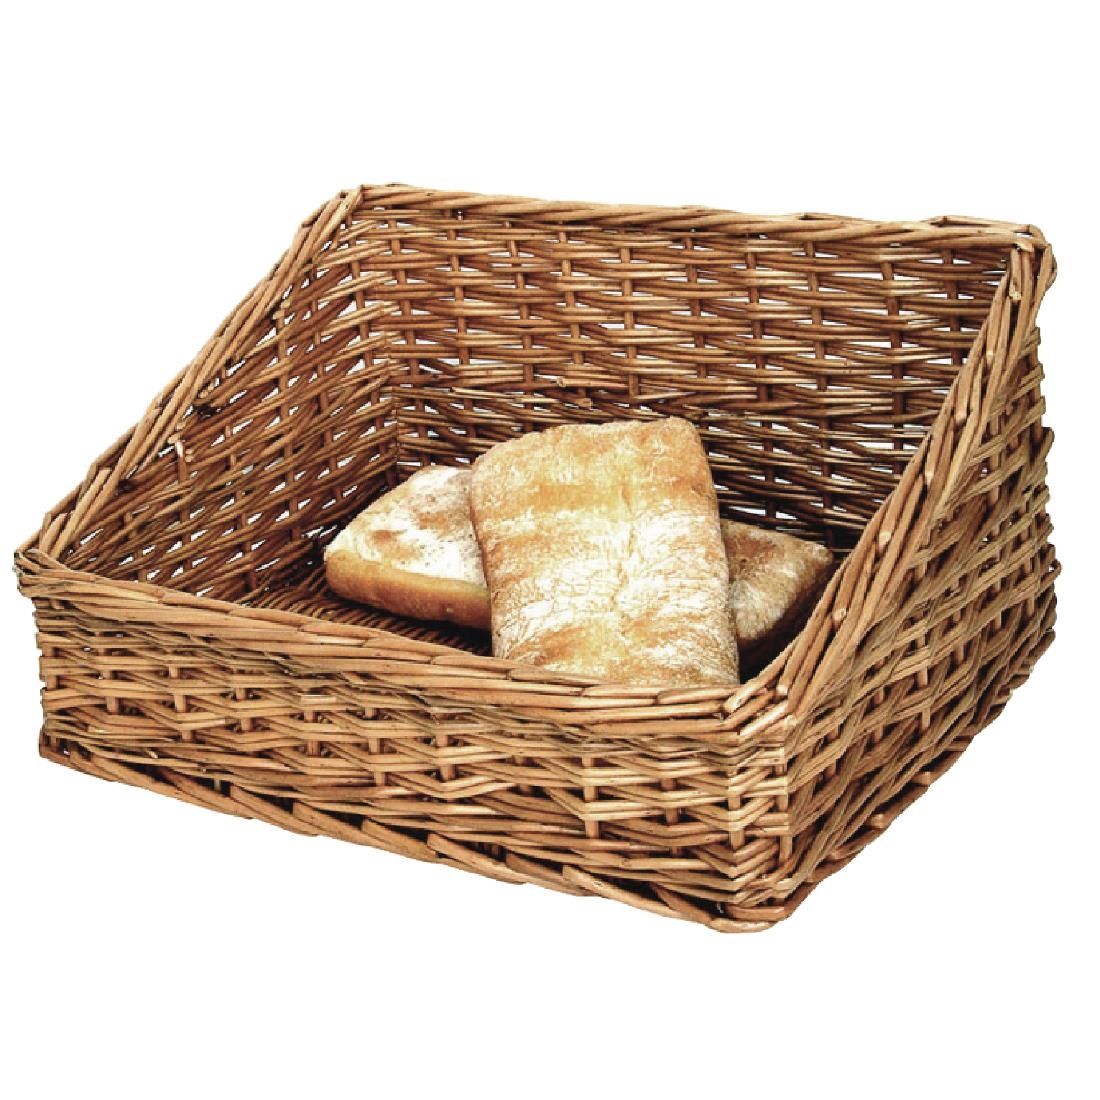 Bread Display Basket 360mm JD Catering Equipment Solutions Ltd